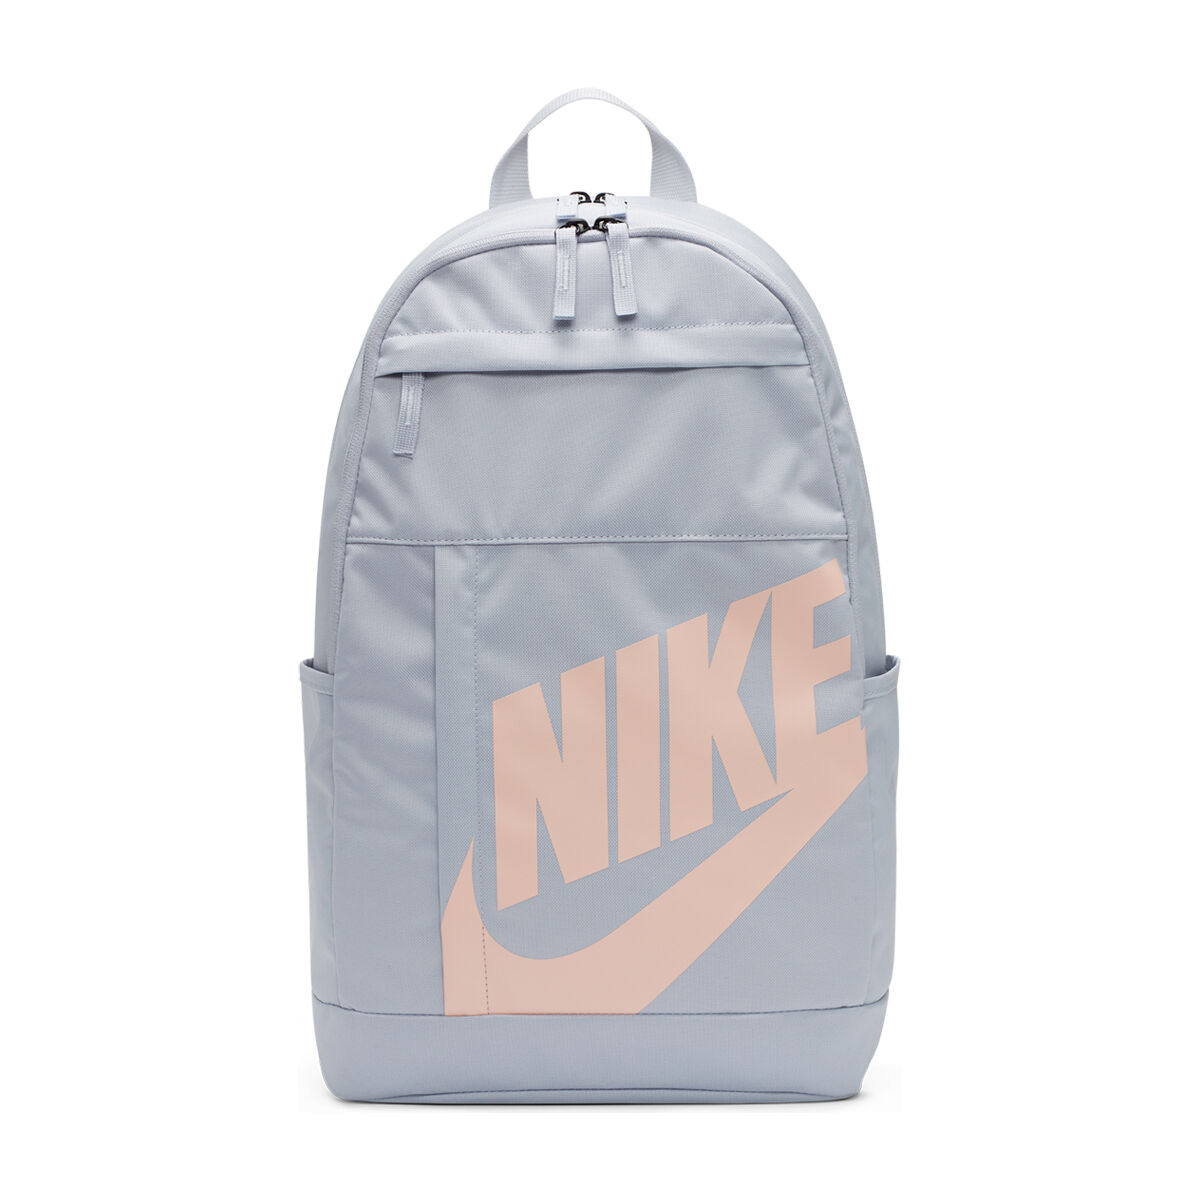 nike bags for school girls 